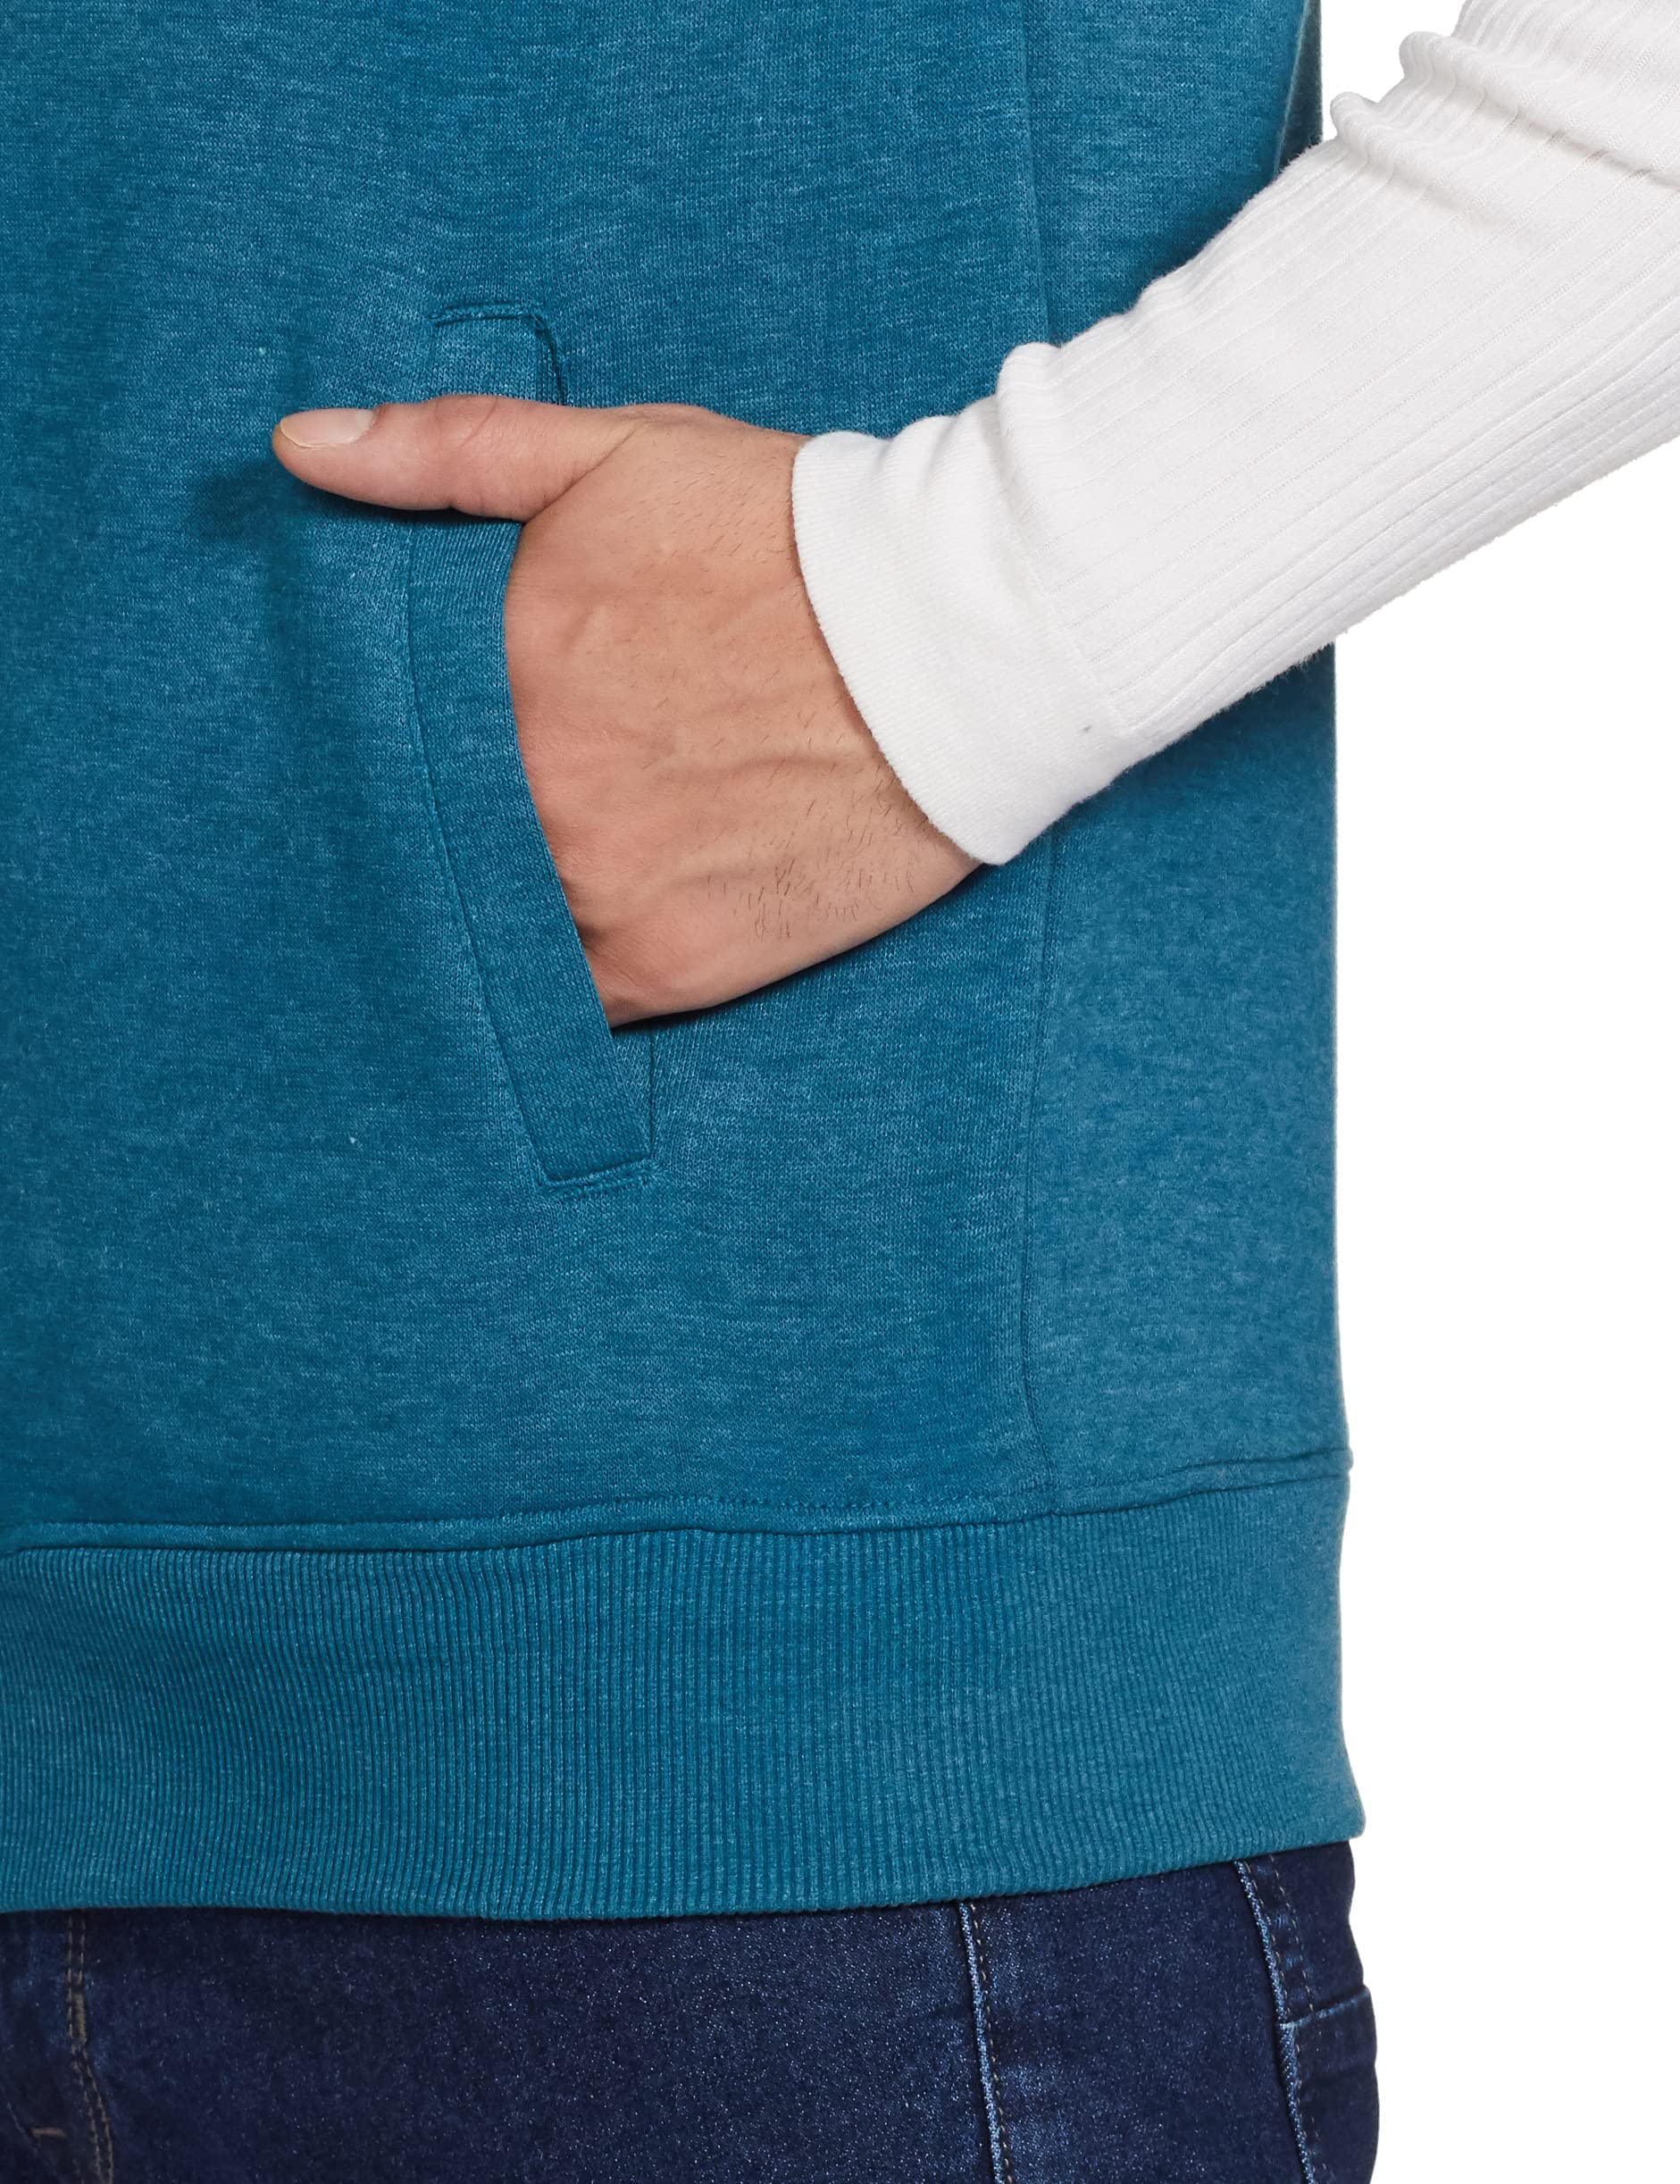 Amazon Brand - Symbol Men's Cotton Hooded Neck Sweatshirt(AW18MNSSW06_Fog Teal Mel_L_Fog Teal Mel_L) 